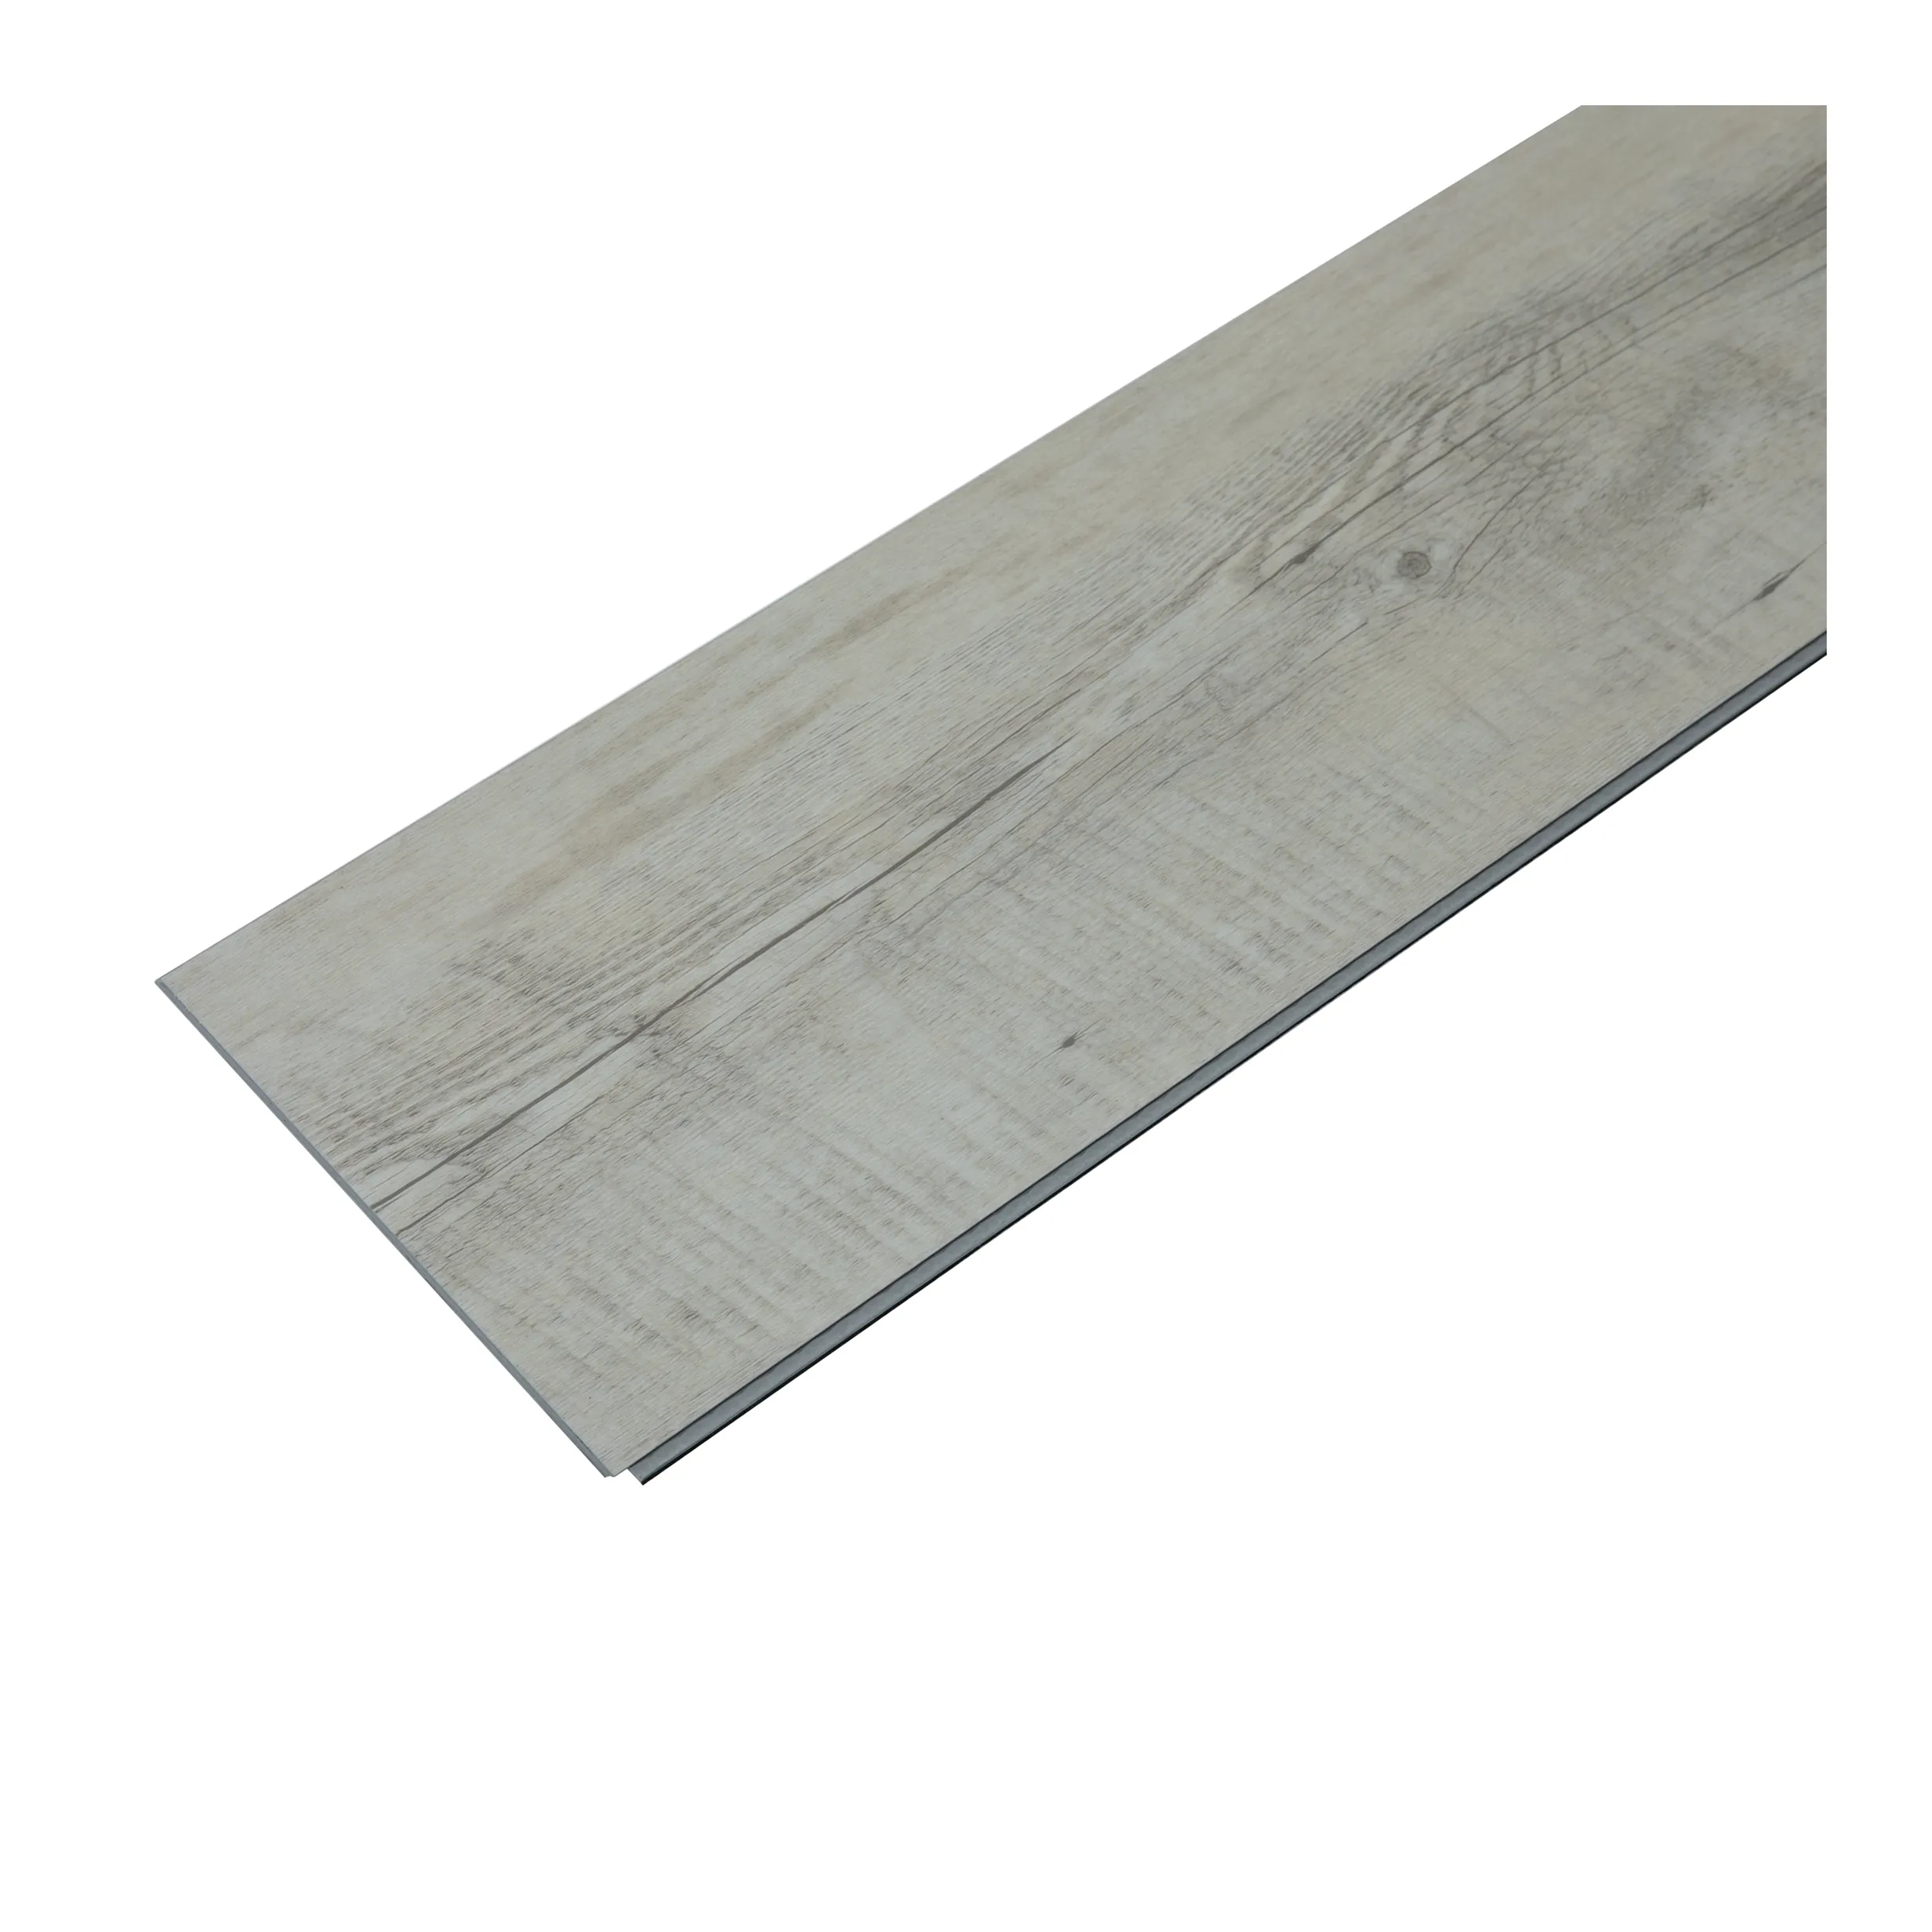 Durable cheap wholesale wear resistant vinyl spc flooring hybrid floor unilin valinge click for household using